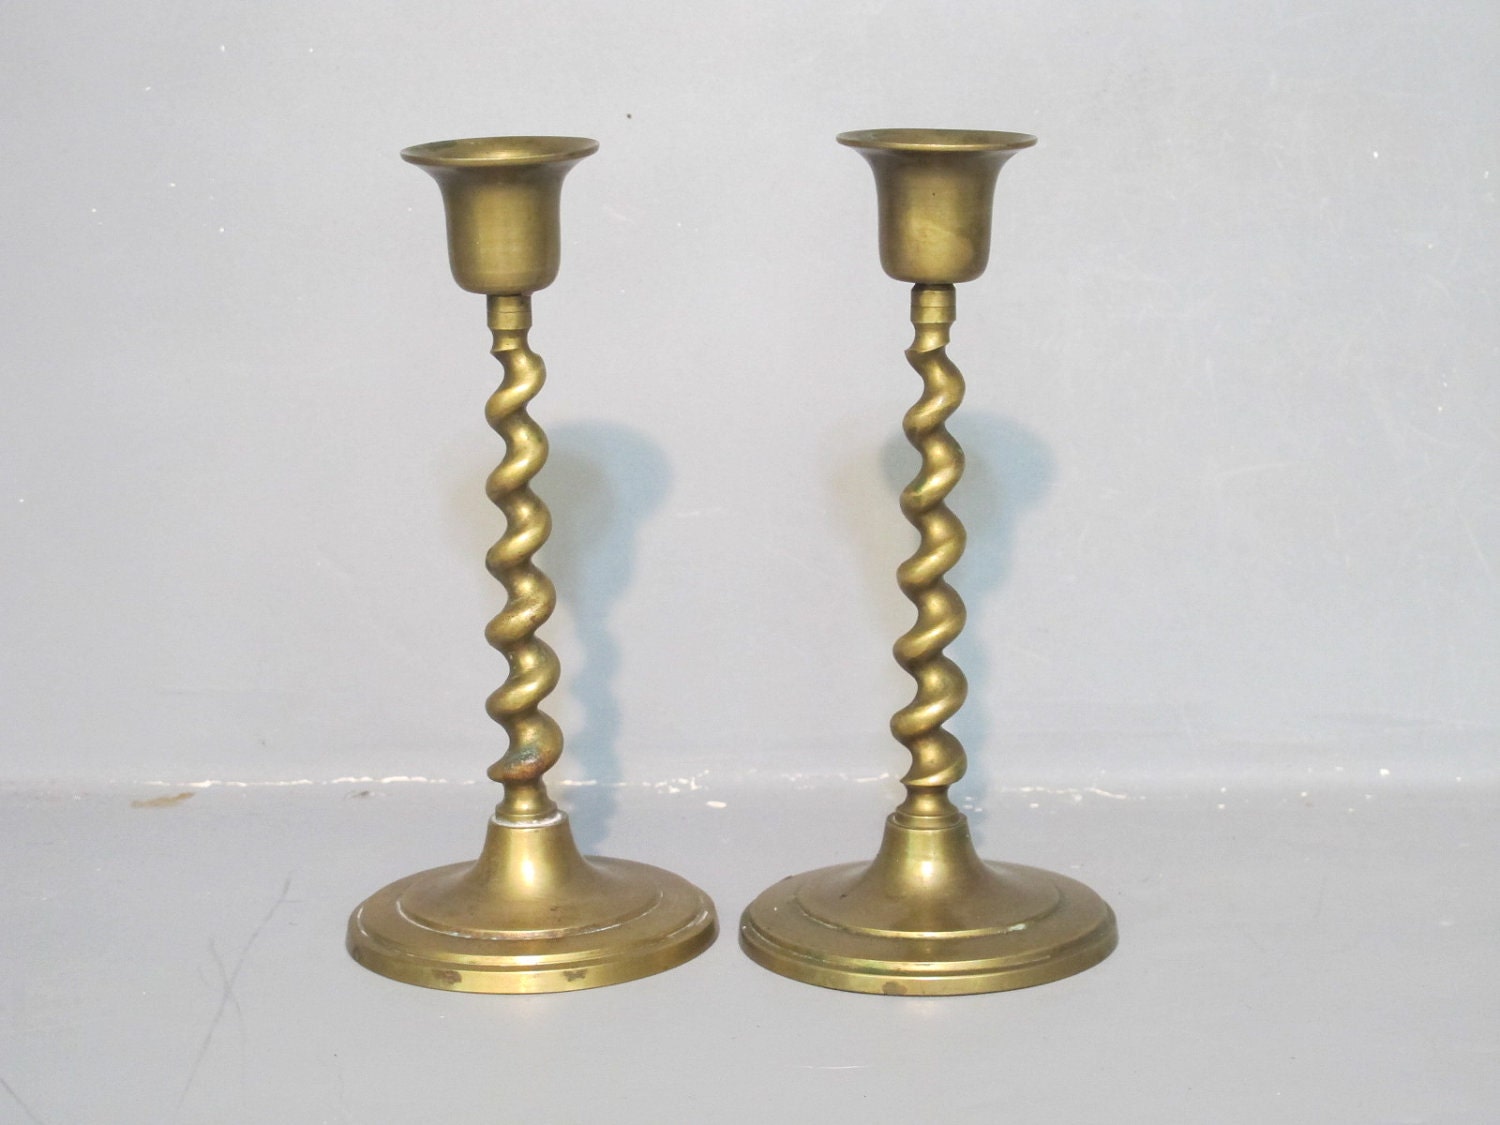 Vintage Brass Candle Holders Set of 2 / Pair of by MilkaCervenka